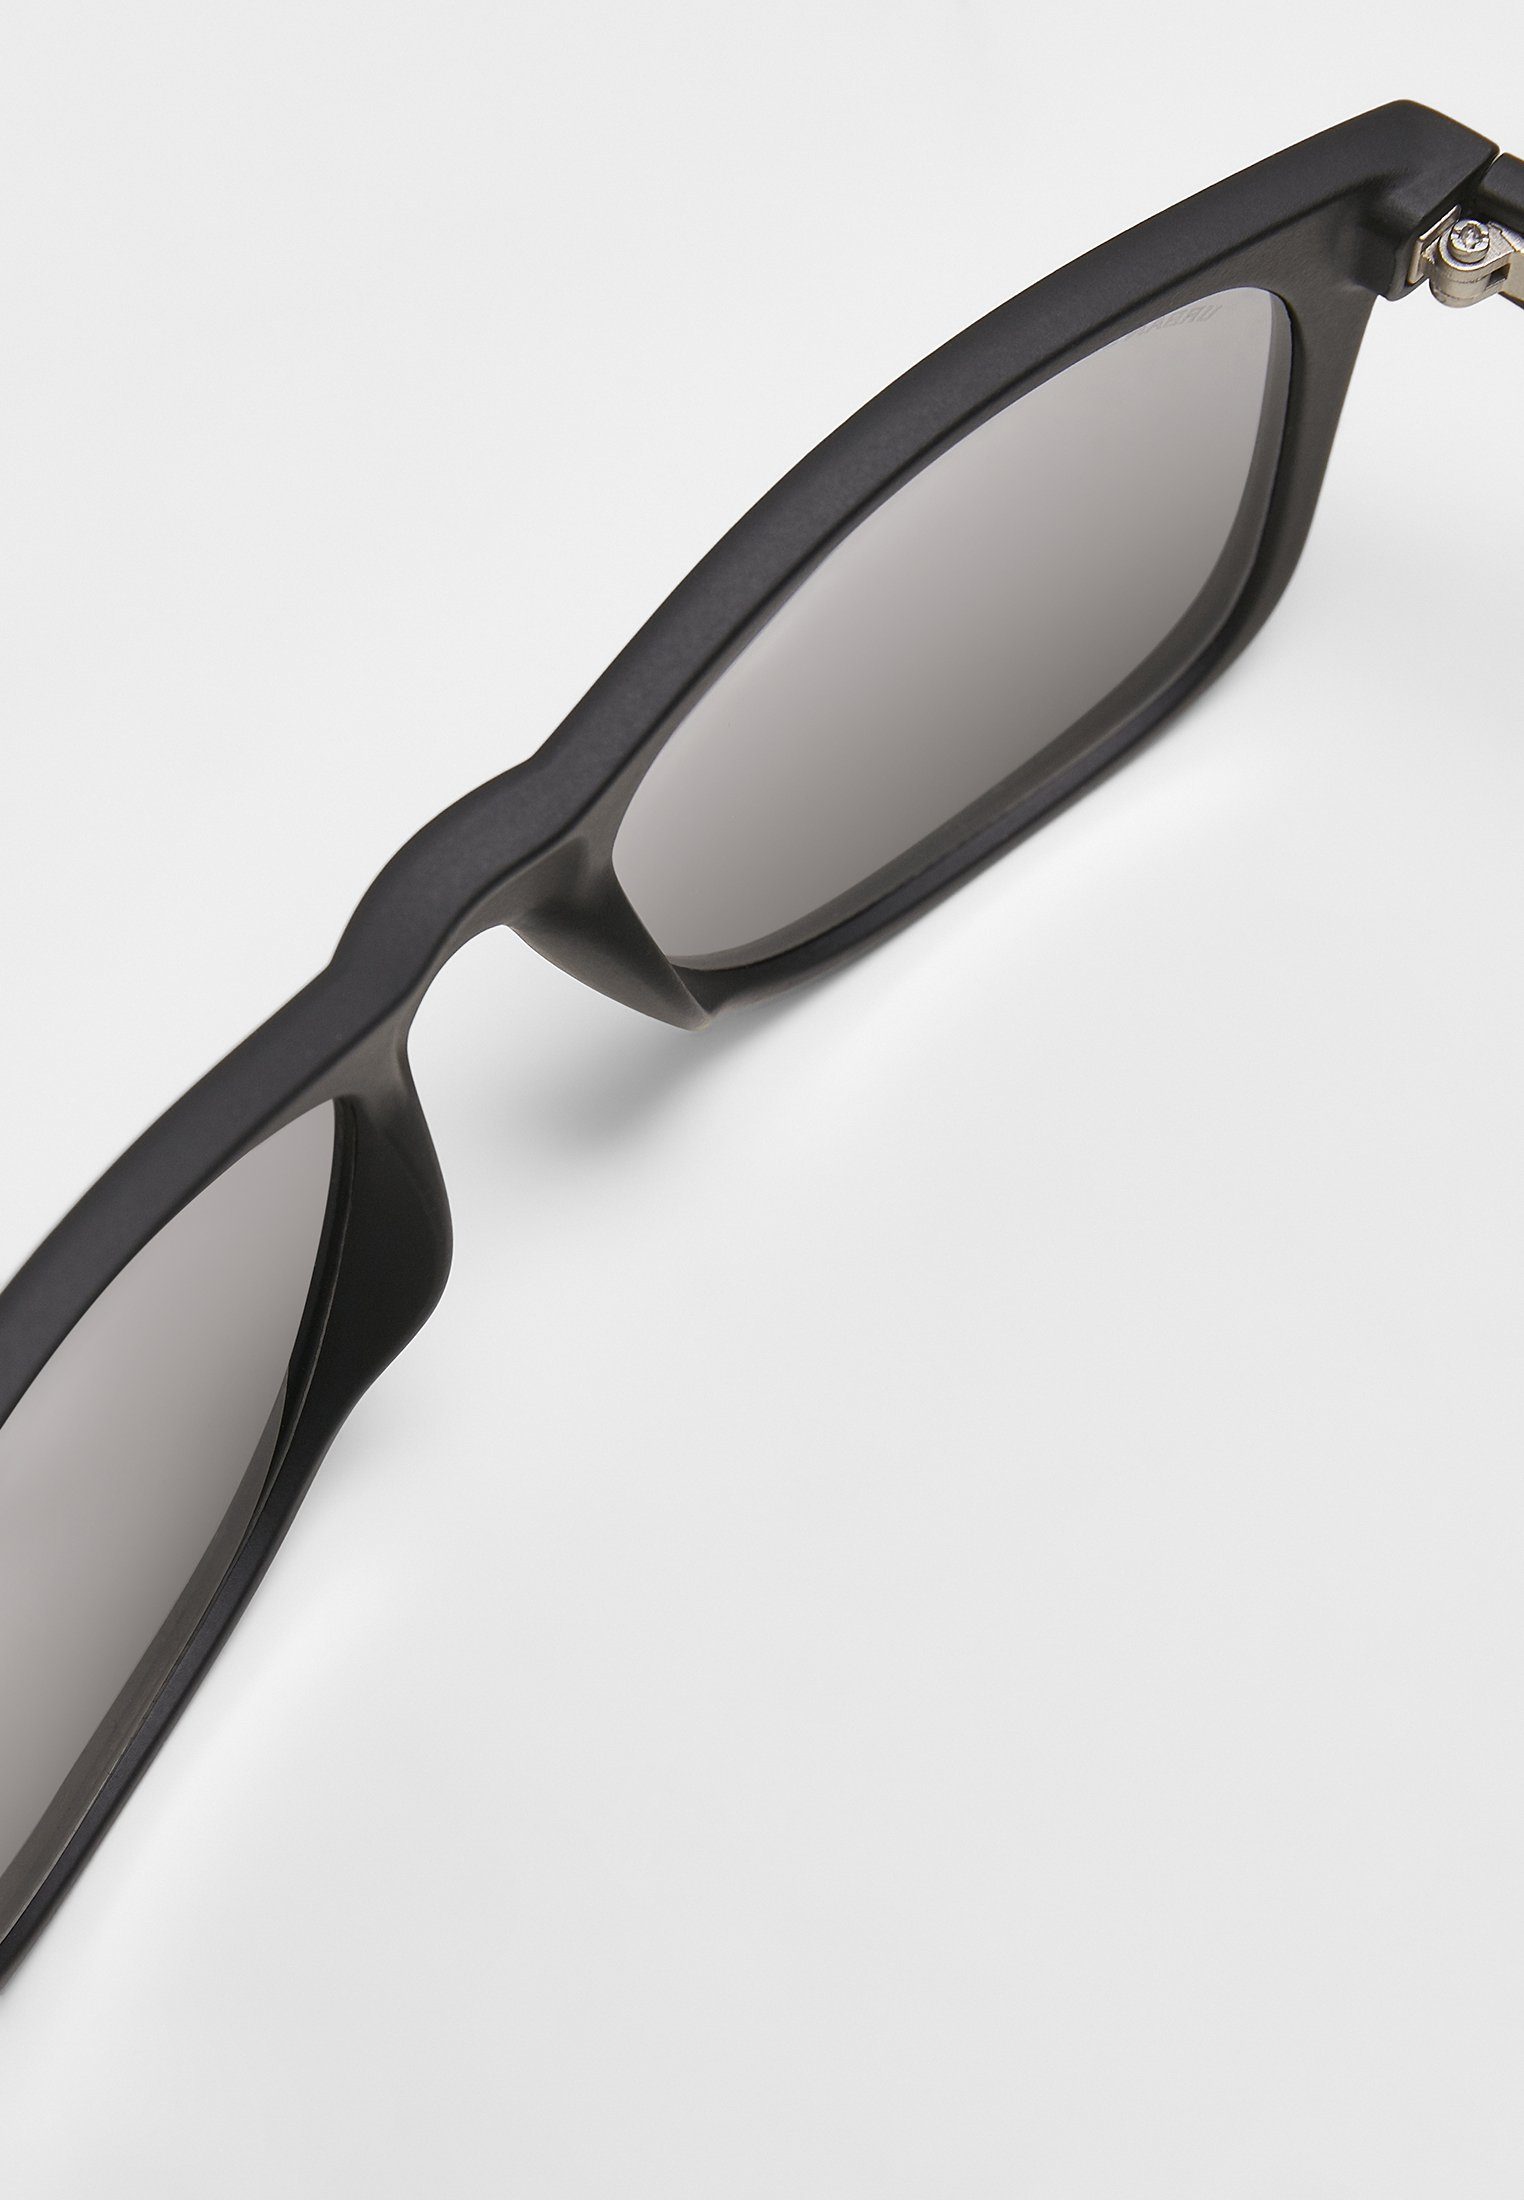 UC Sonnenbrille Accessoires Likoma black/silver CLASSICS Sunglasses URBAN Mirror